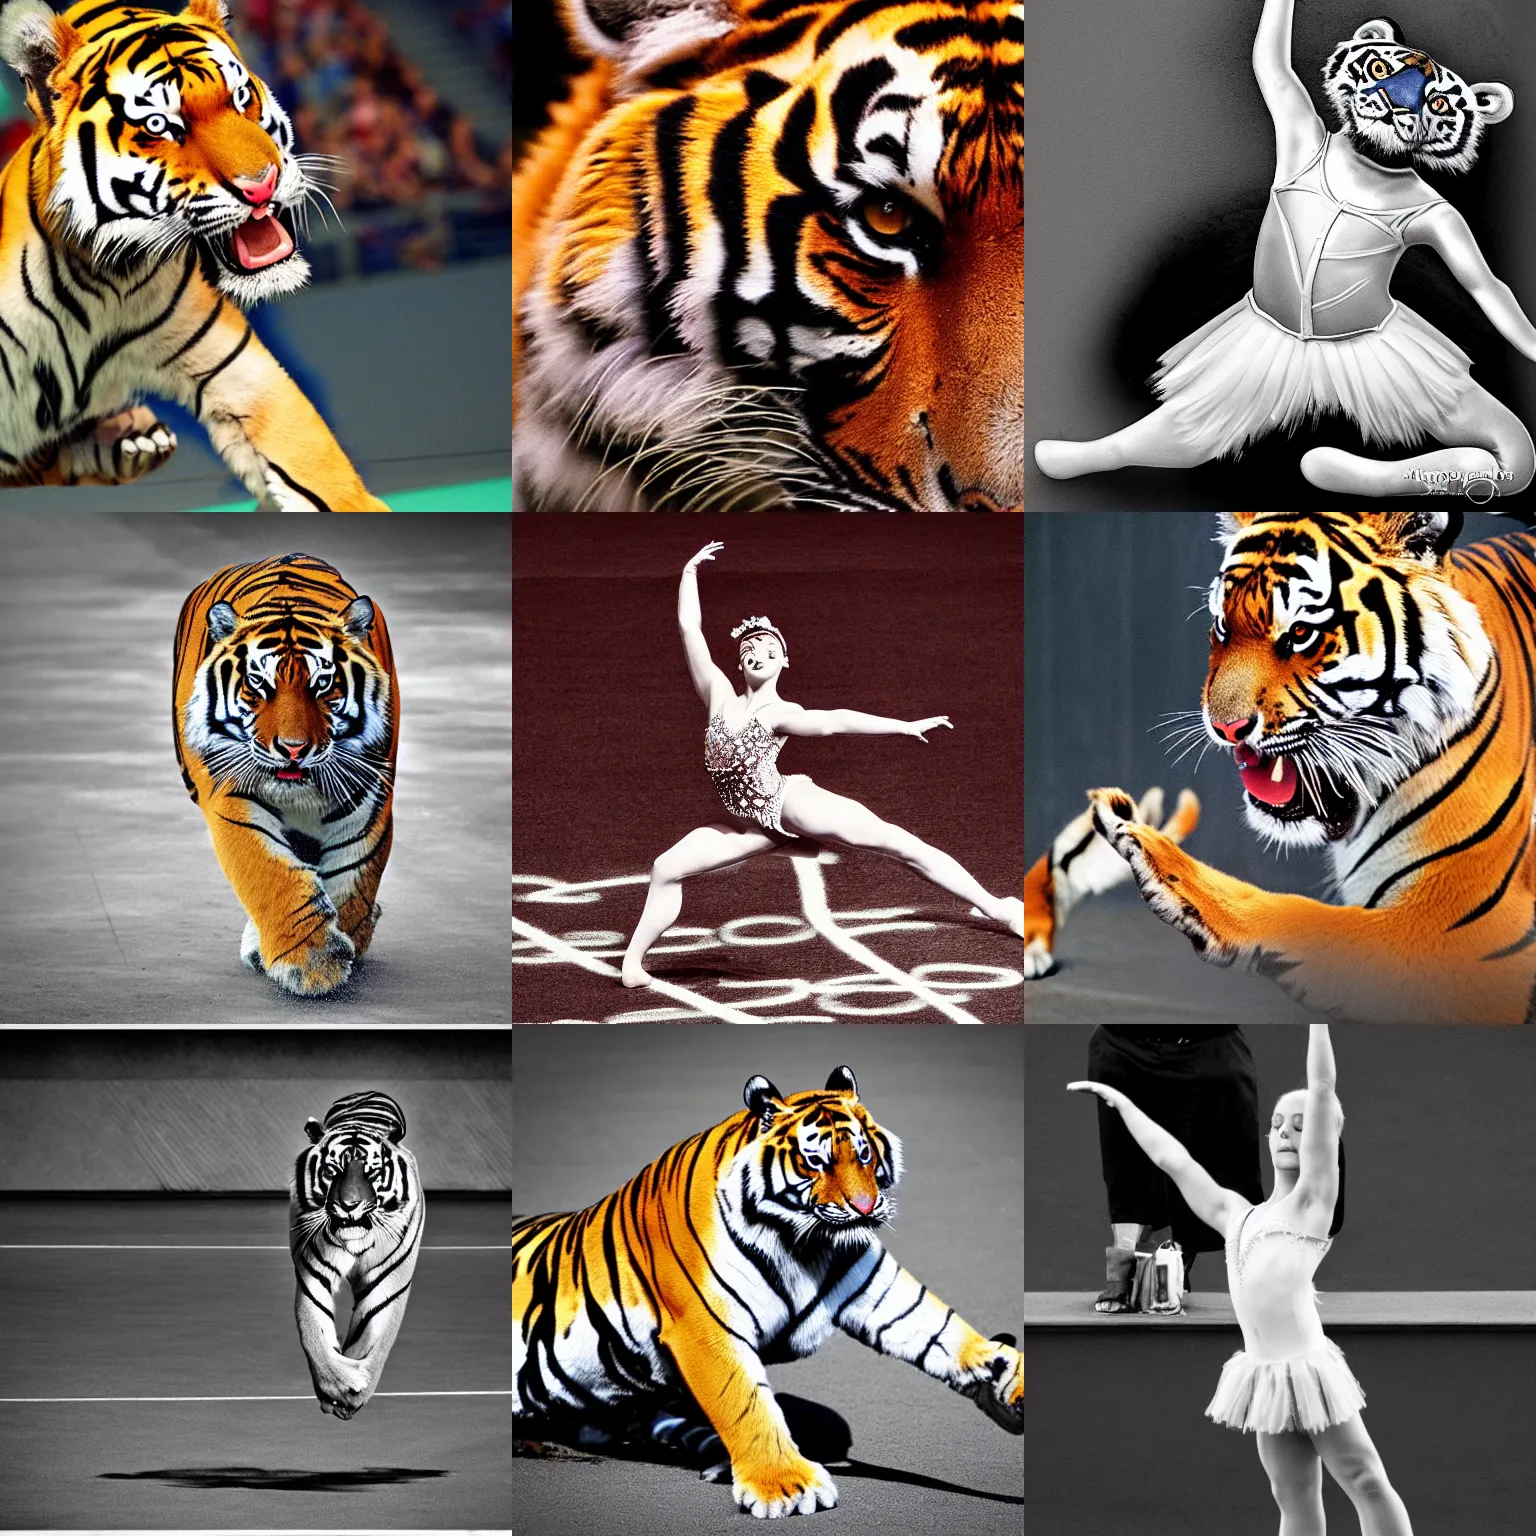 Prompt: a tiger ballerina, award winning photograph, ESPN, Olympics, 60mm